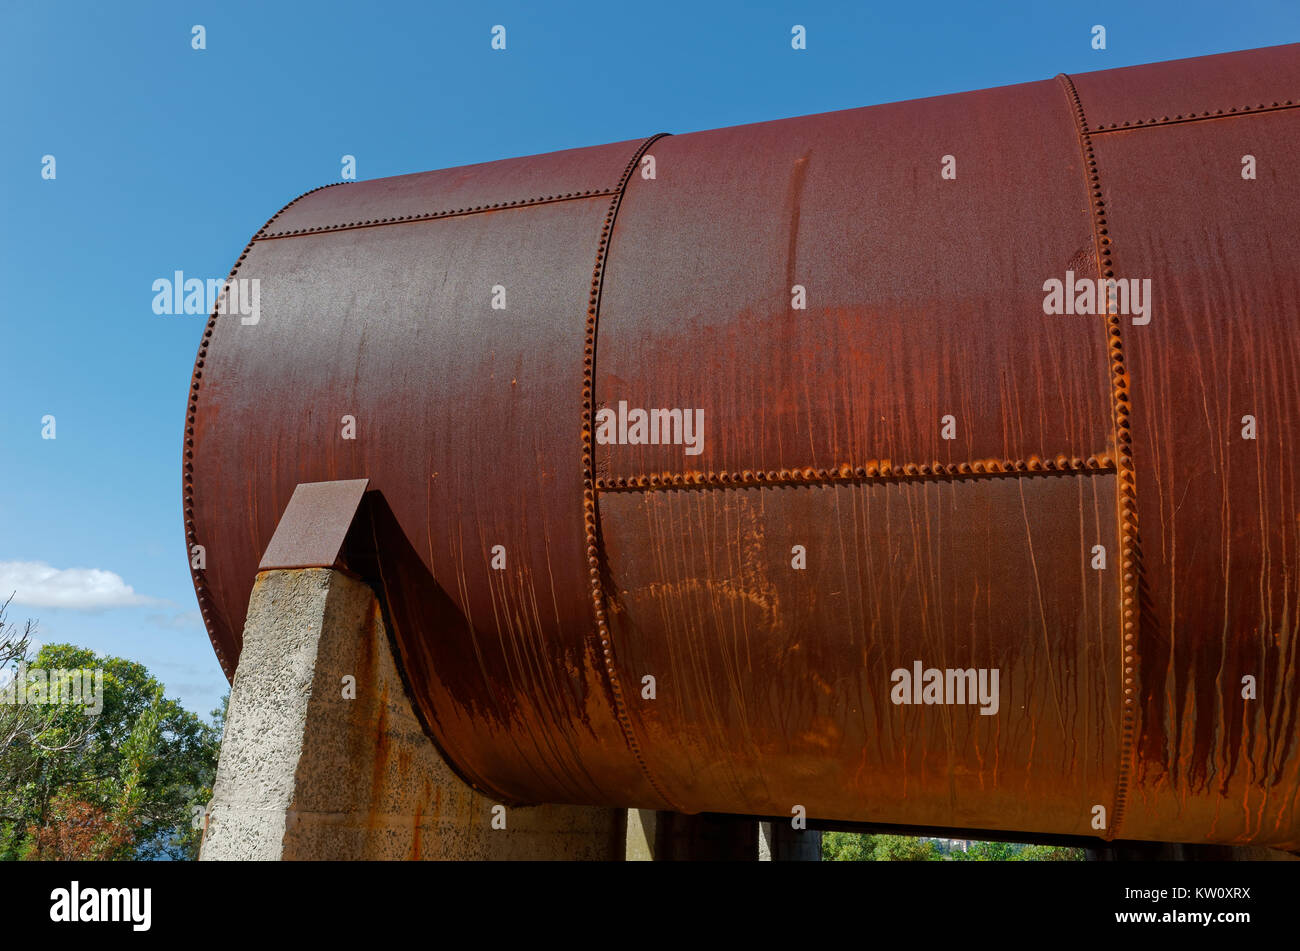 Unused Vintage Oil Storage Tanks at Ballast Point Park in Birchgrove, Sydney, Australia Stock Photo